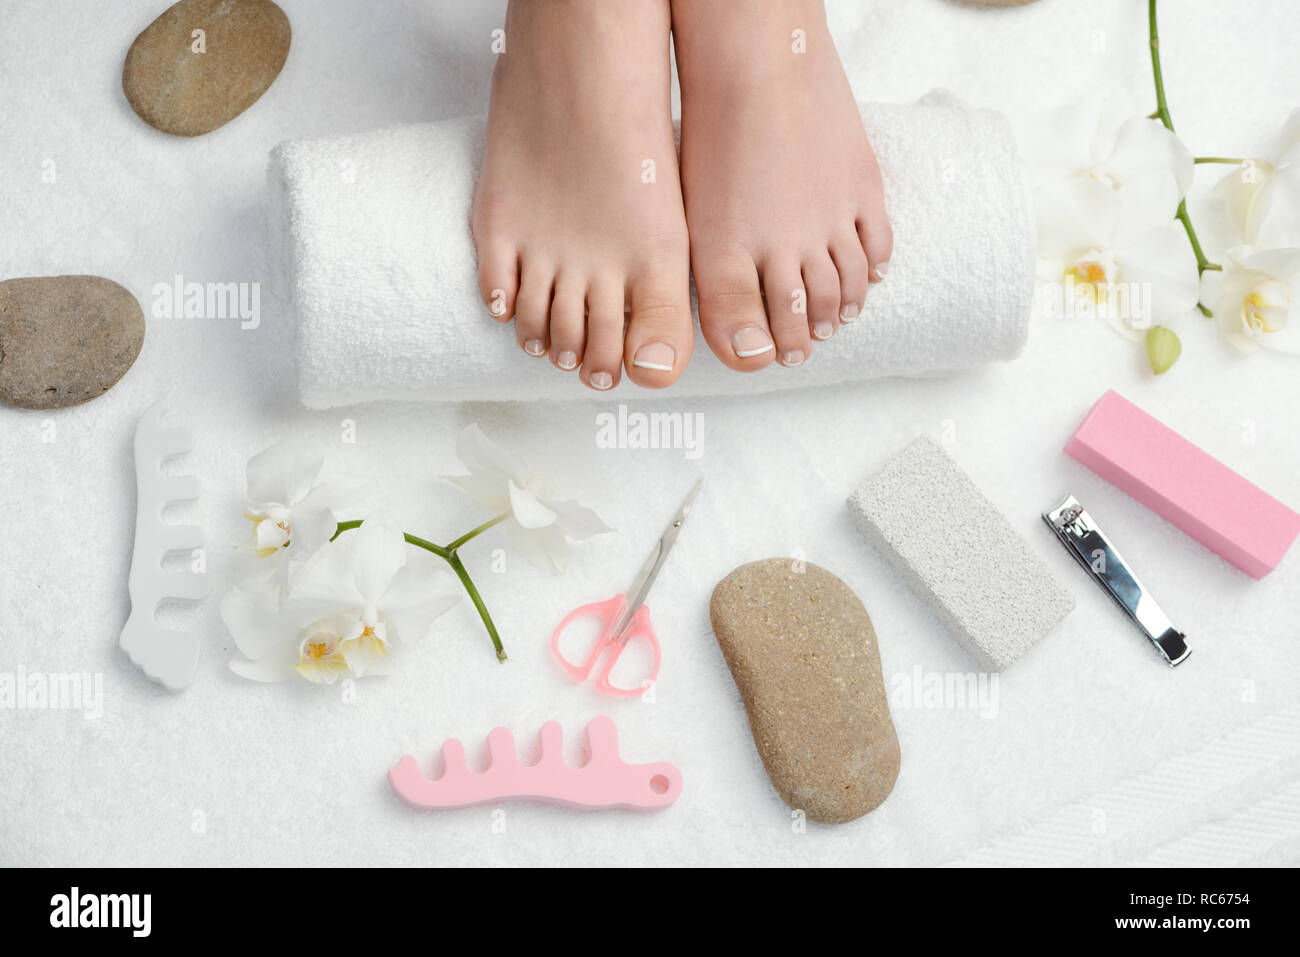 Groomed feet and toe nails Stock Photo